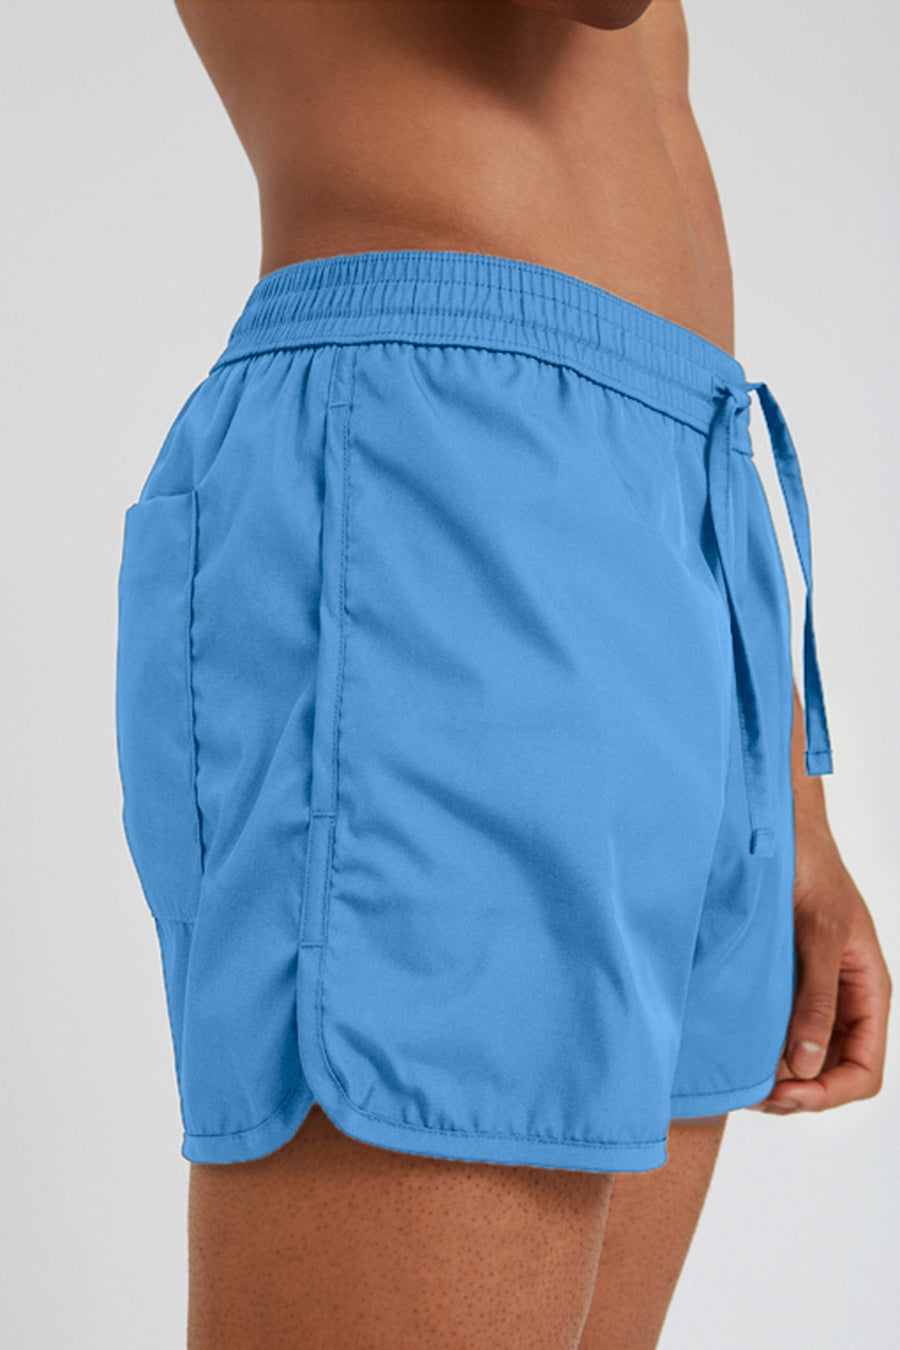 Shorts – boxer 2, blue